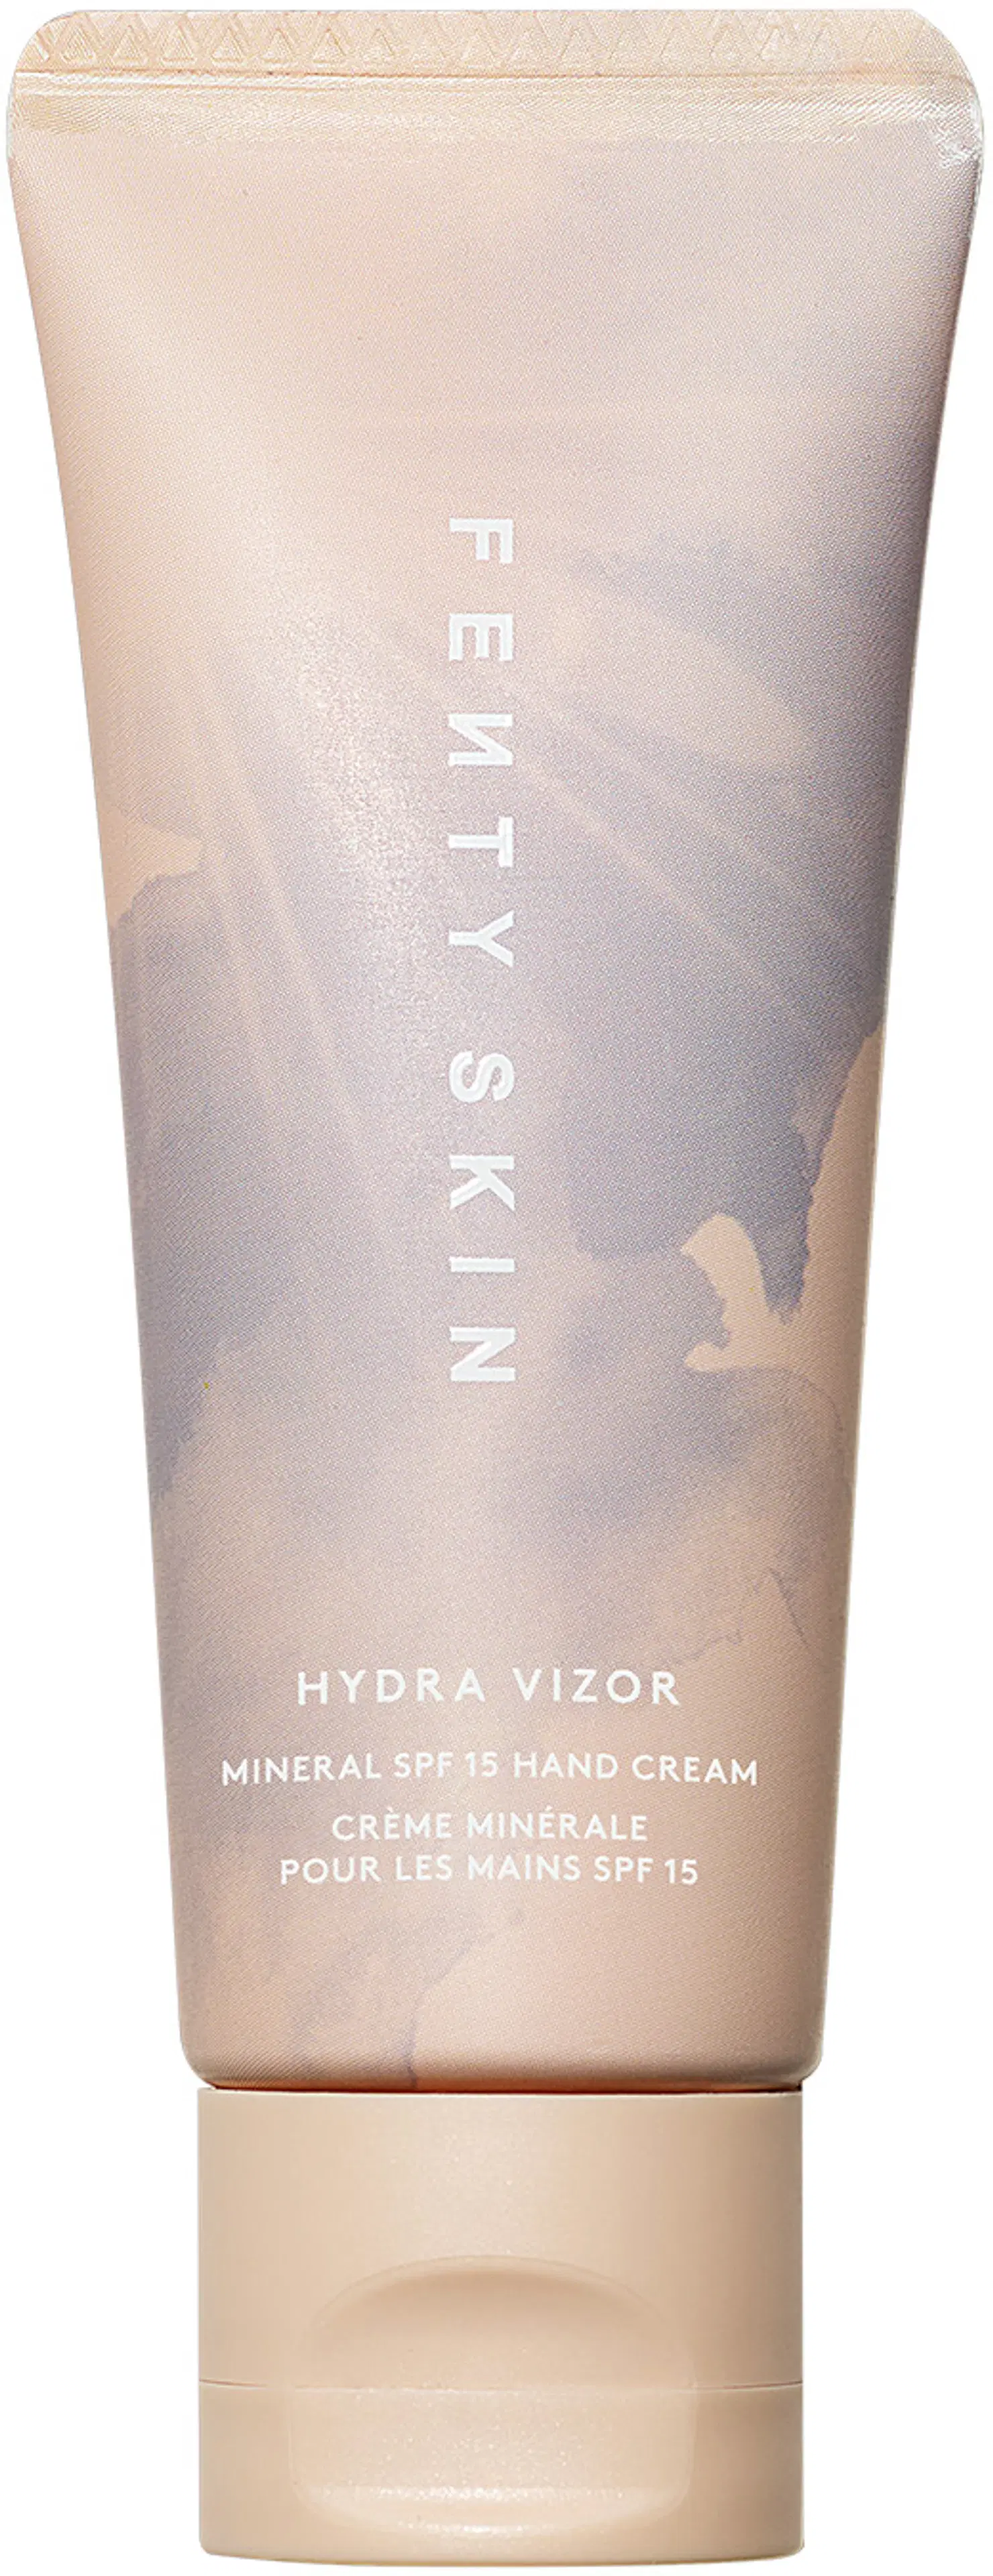 Fenty Skin Hydra Vizor SPF 15 Hand Creme käsivoide 75 ml